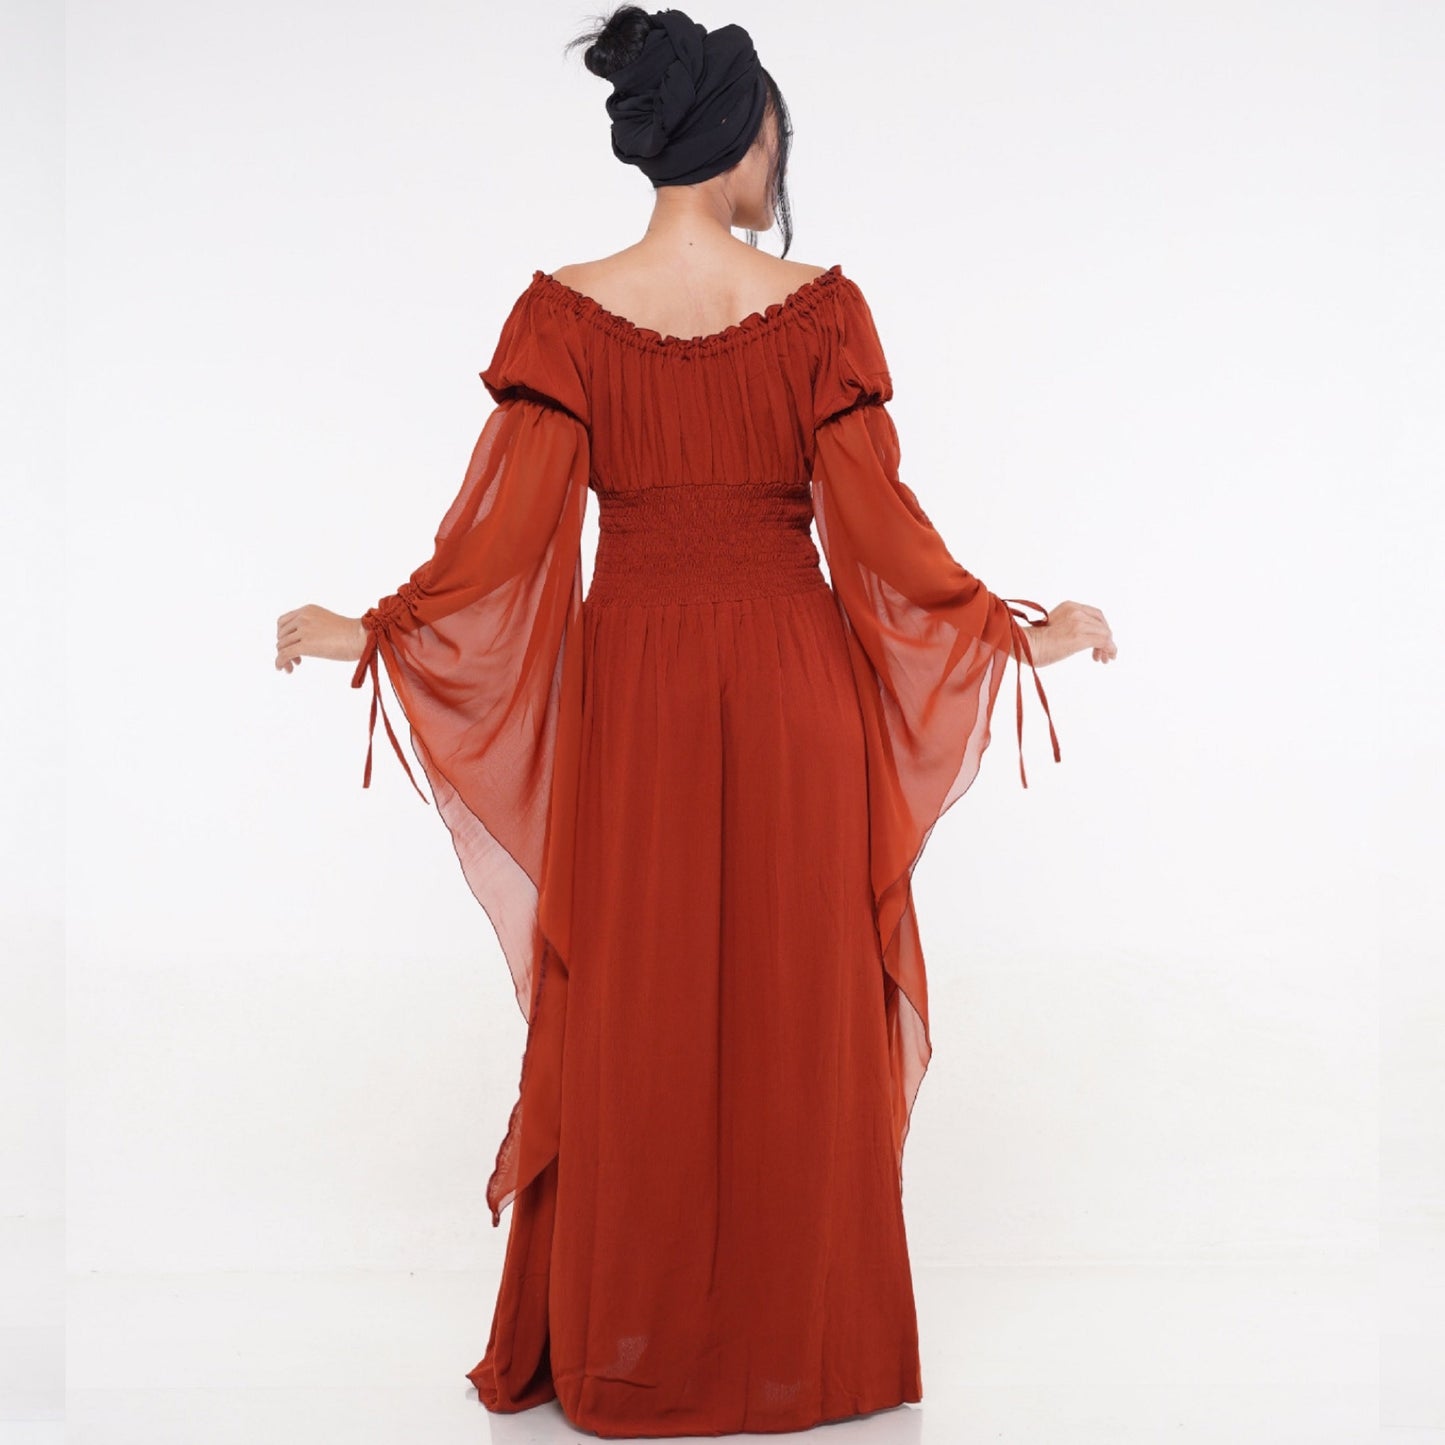 Clarissa Flowing Sleeve Renaissance Romantic Maxi Dress - The Bohemian Closet